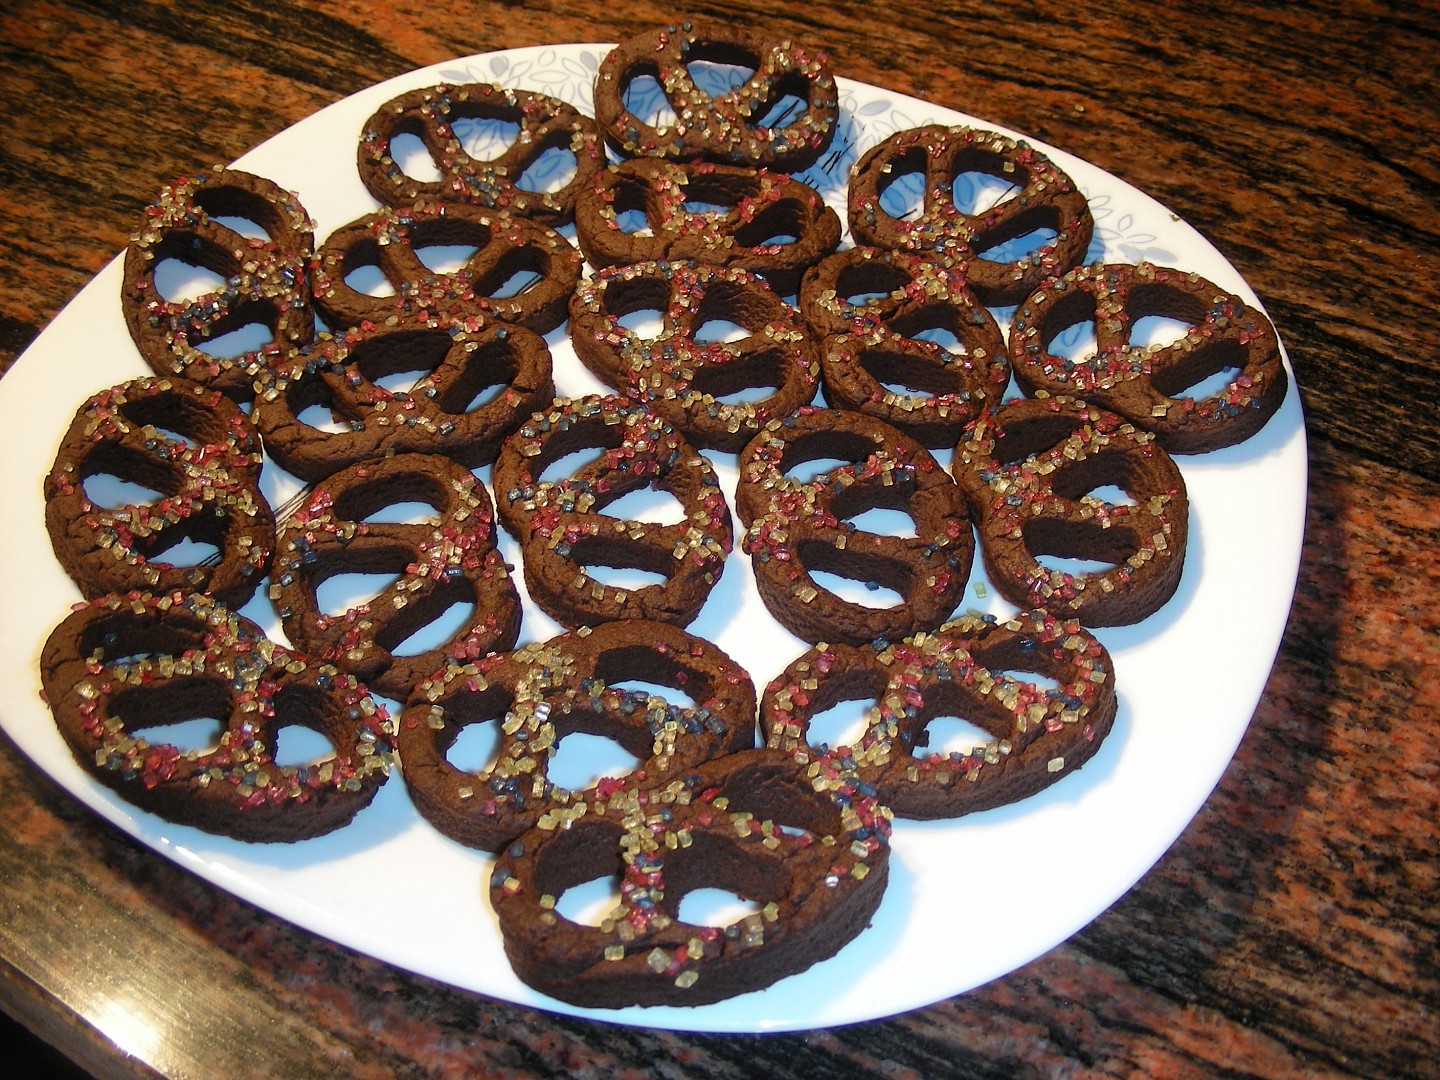 Alsaské čokoládovo-kávové bretzels